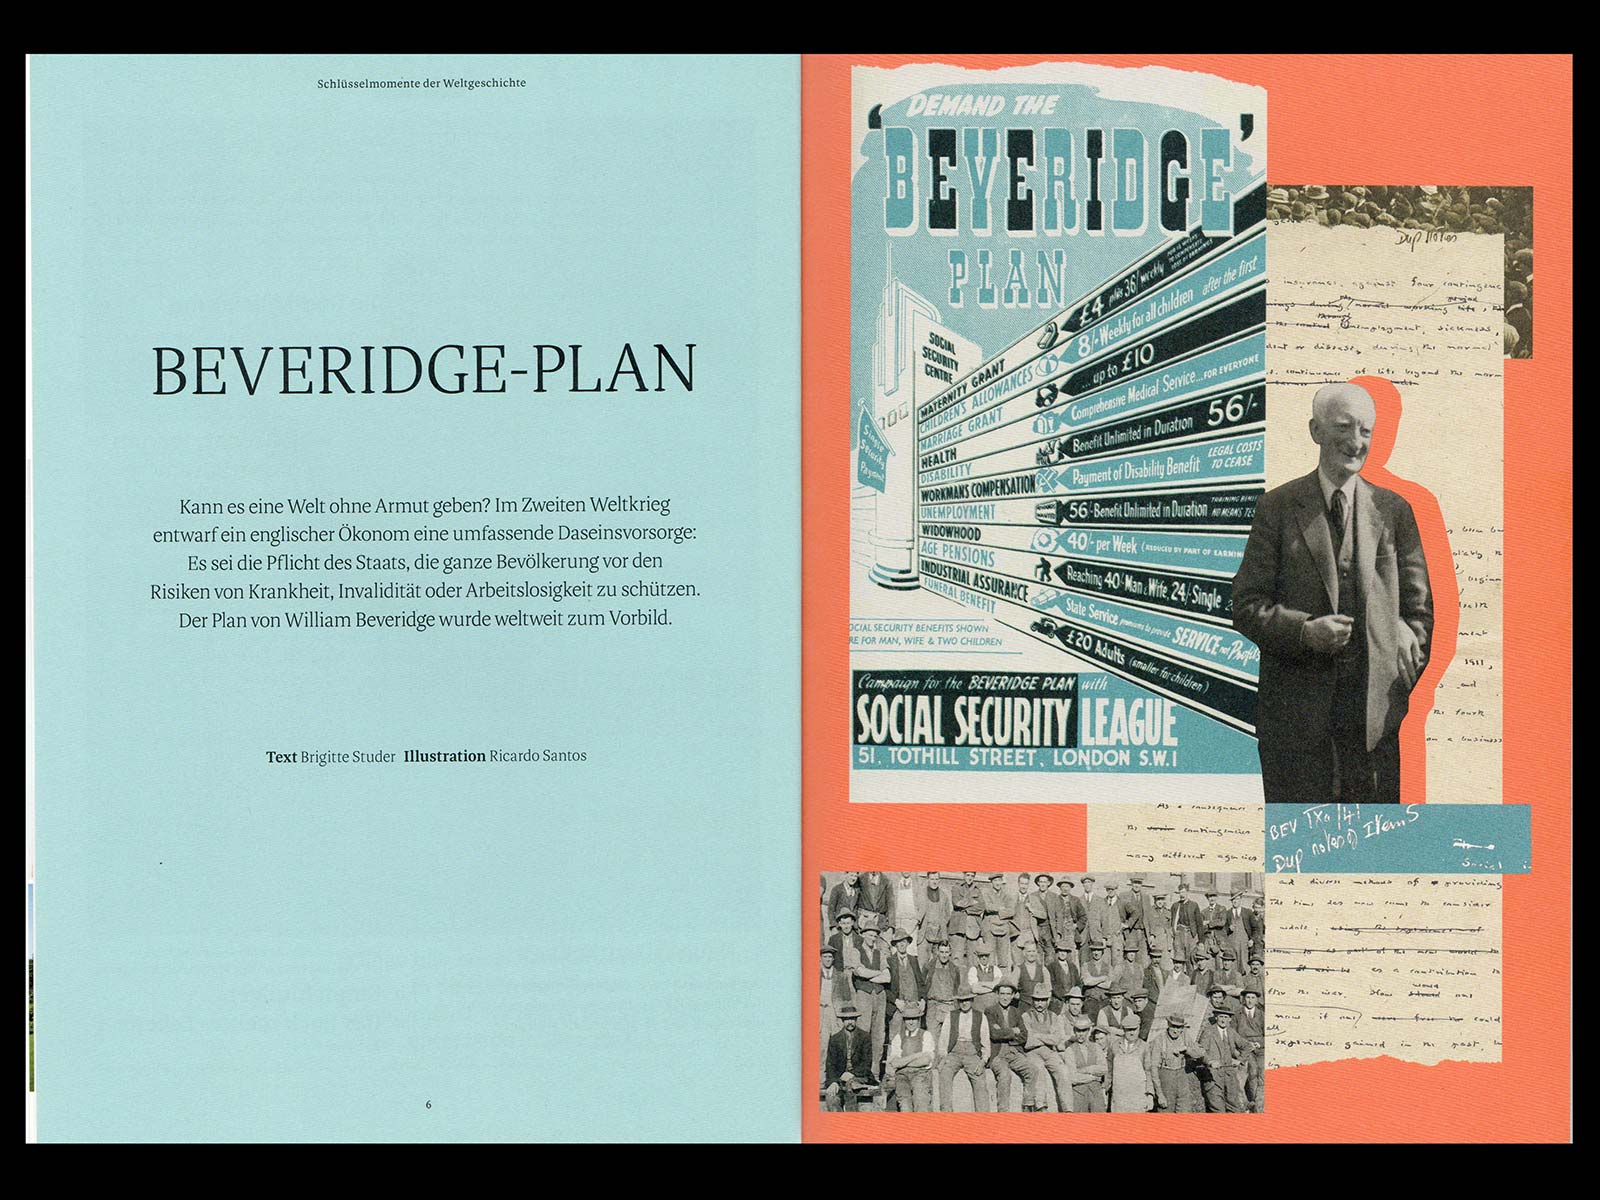 The Beveridge Plan